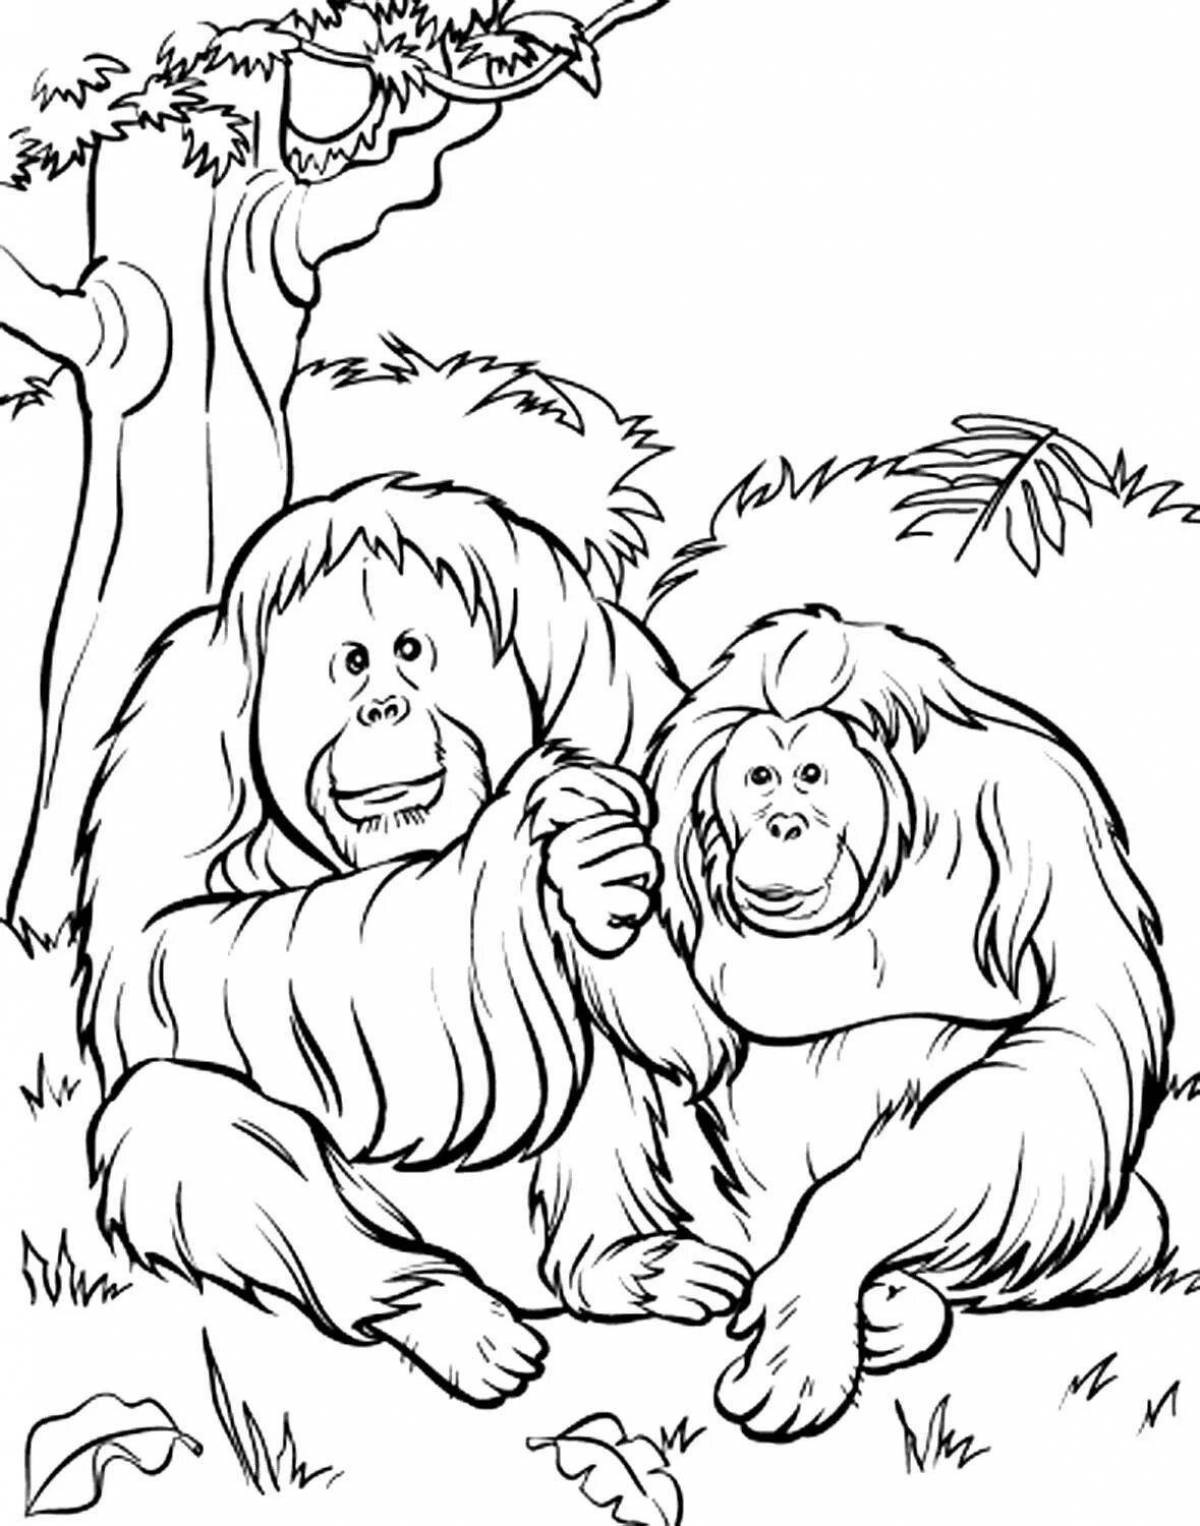 Coloring book cheerful orangutan